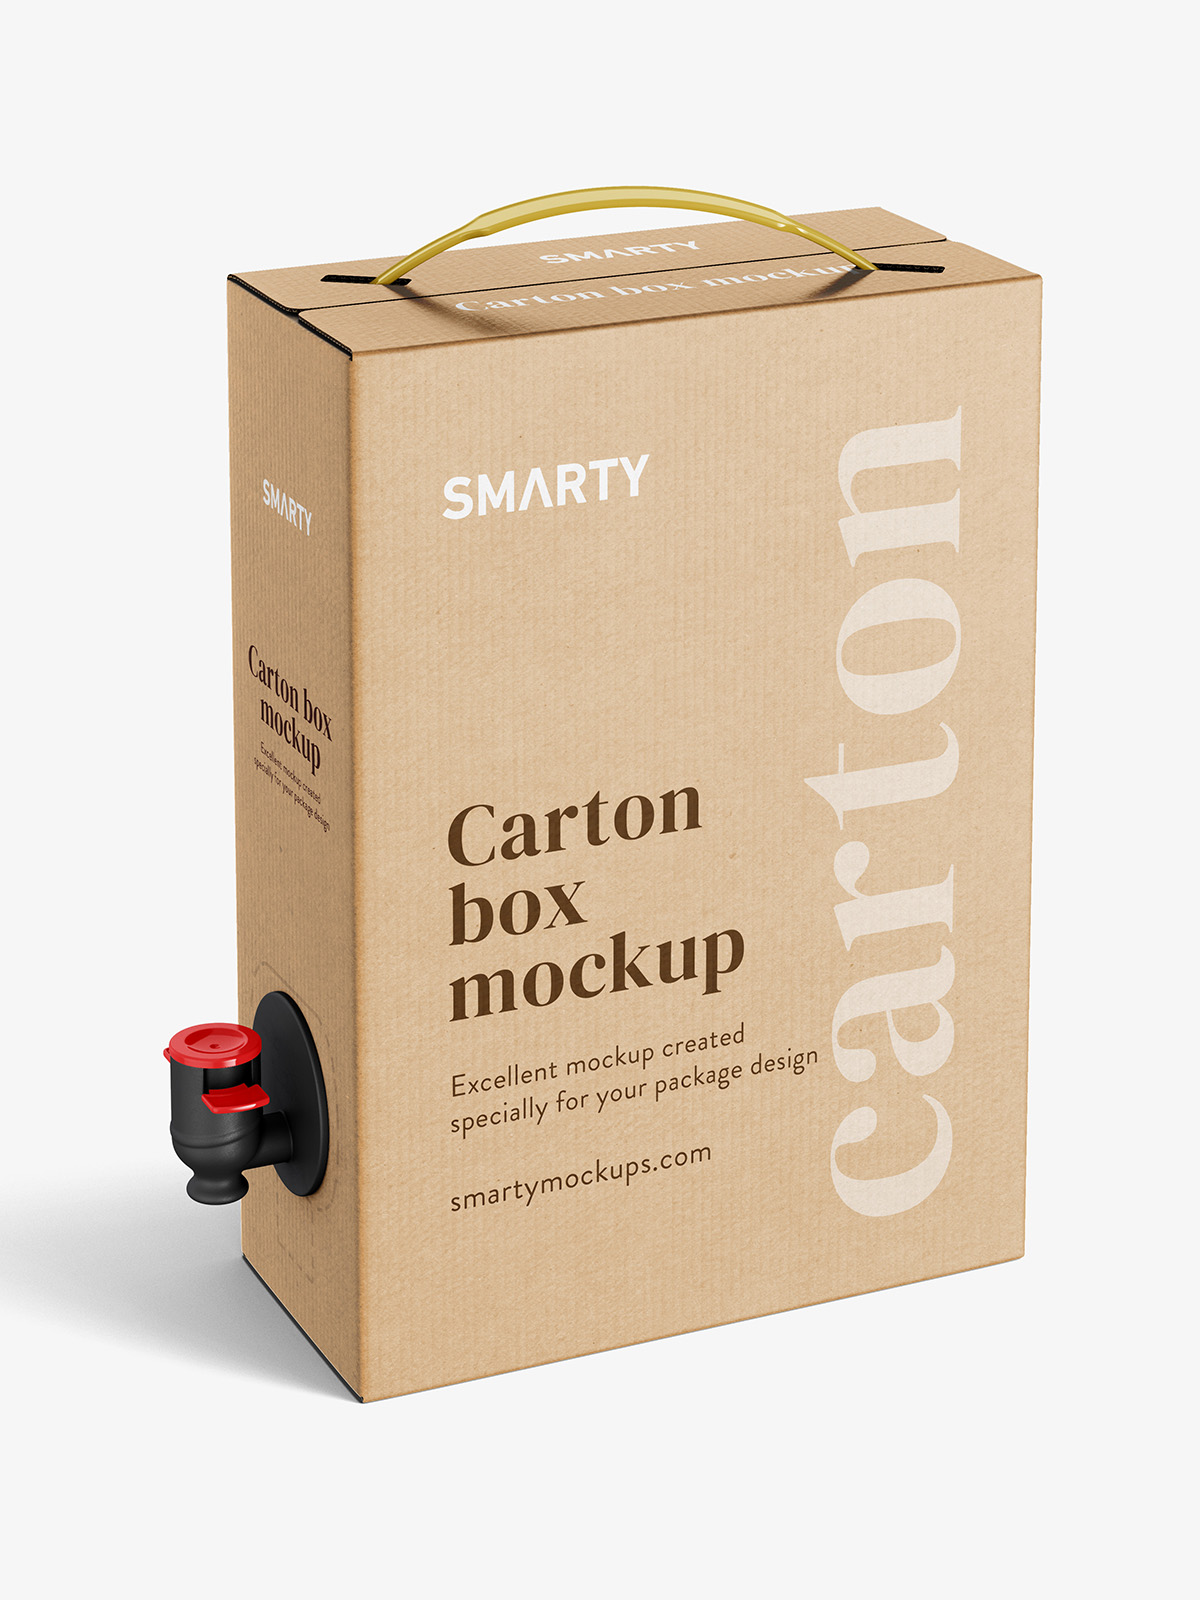 Download Wine / Juice carton box mockup - Smarty Mockups